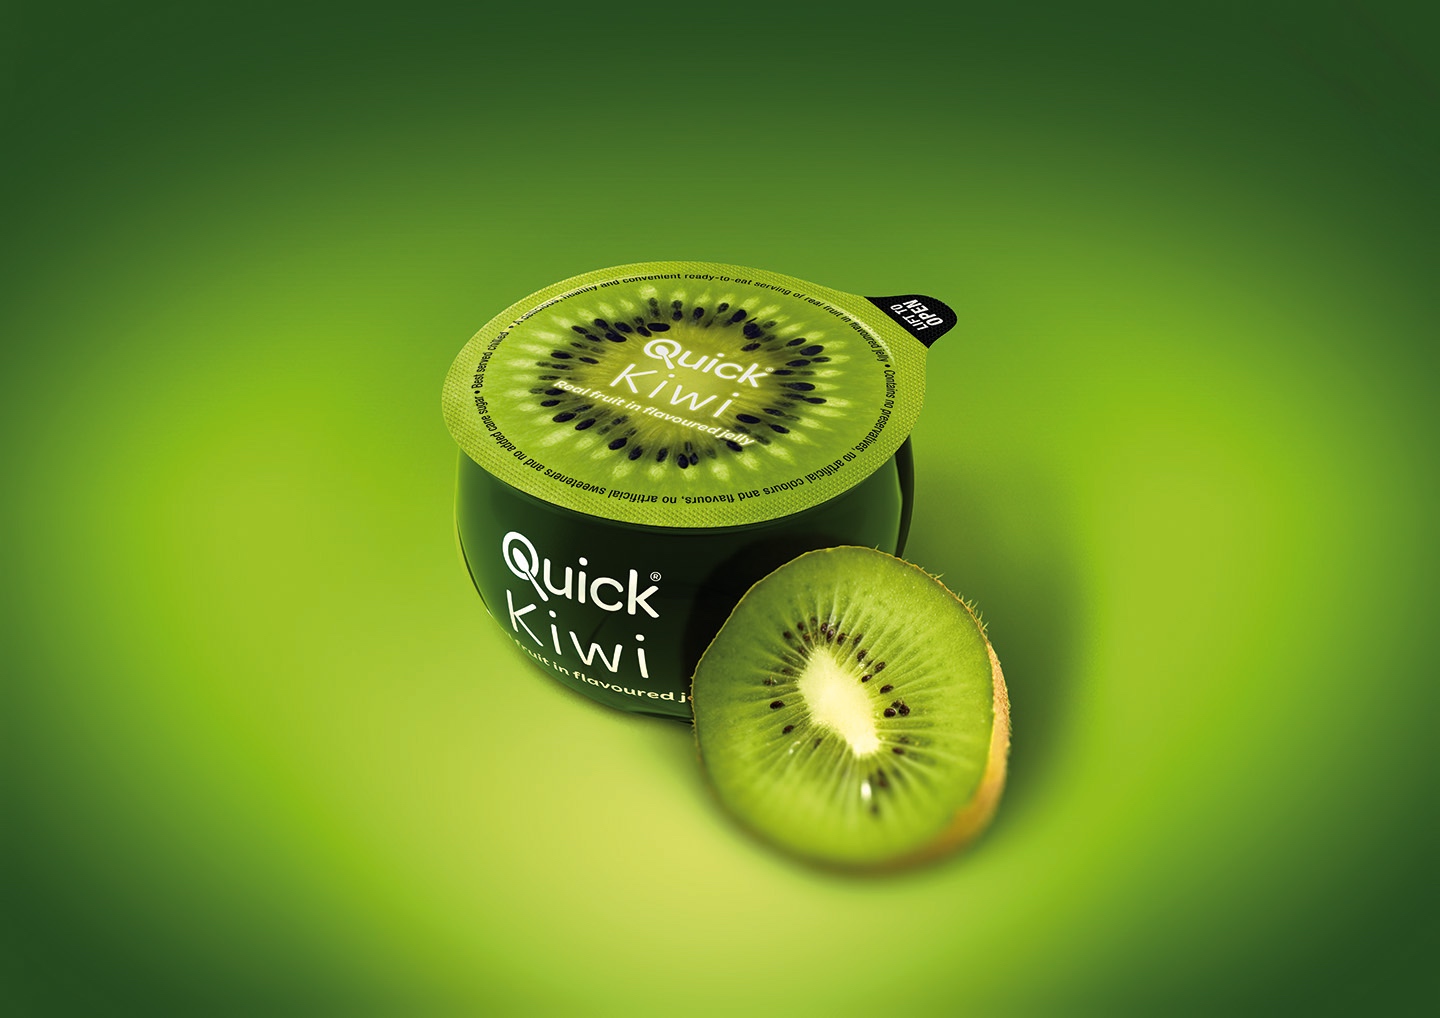 Quick Kiwi Packaging